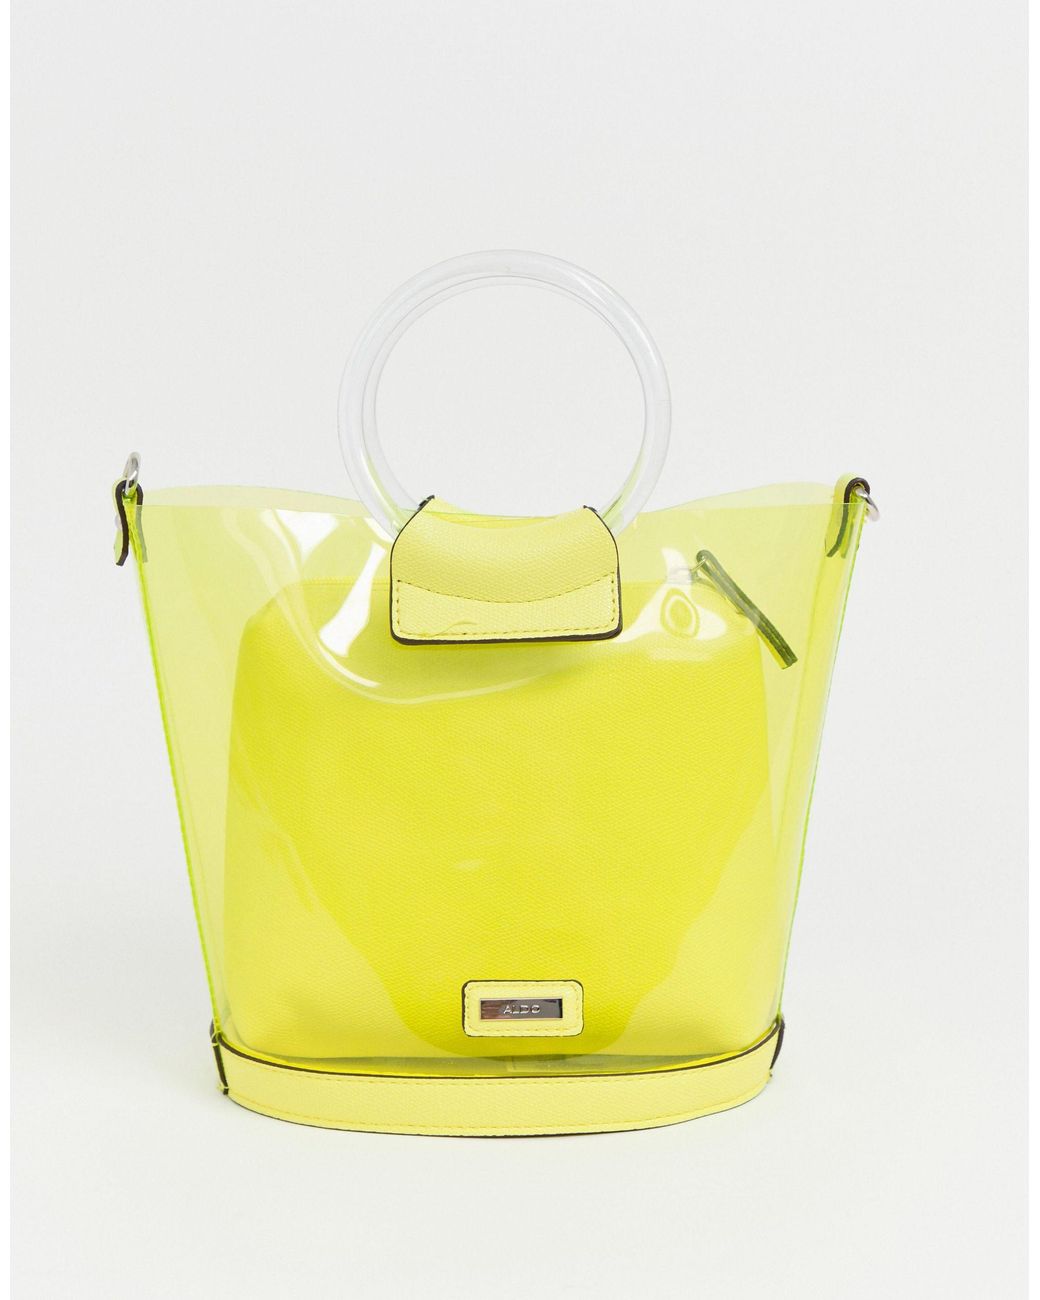 Aldo lime green purse size medium Light pink... - Depop